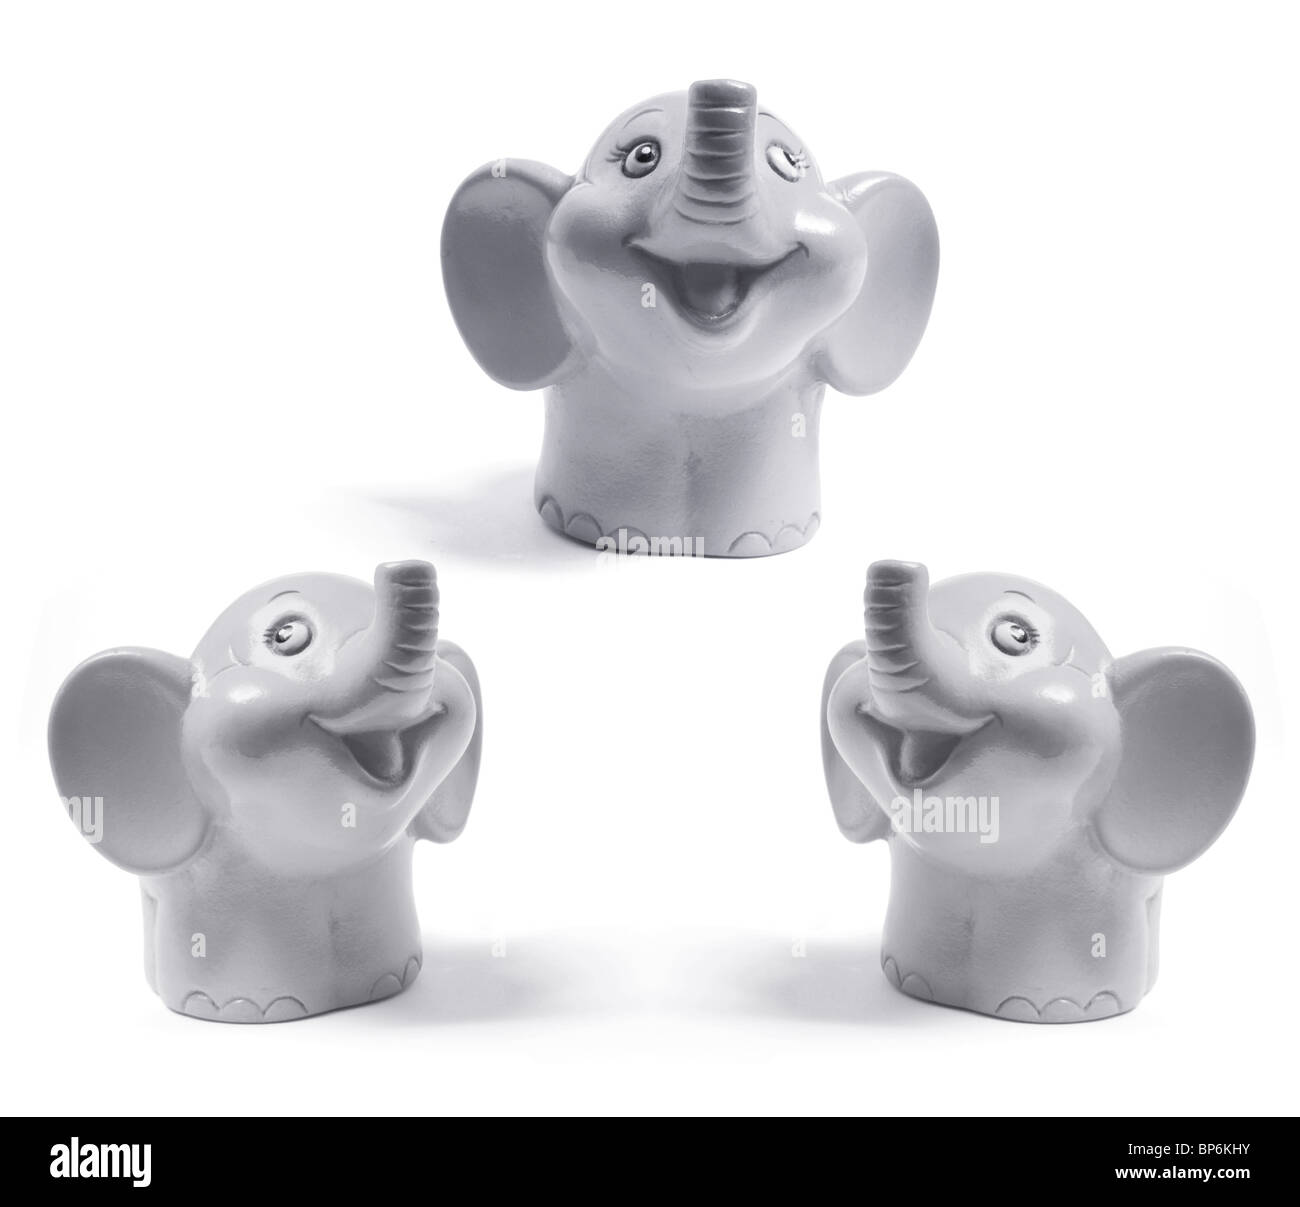 Toy Baby Elephants Stock Photo